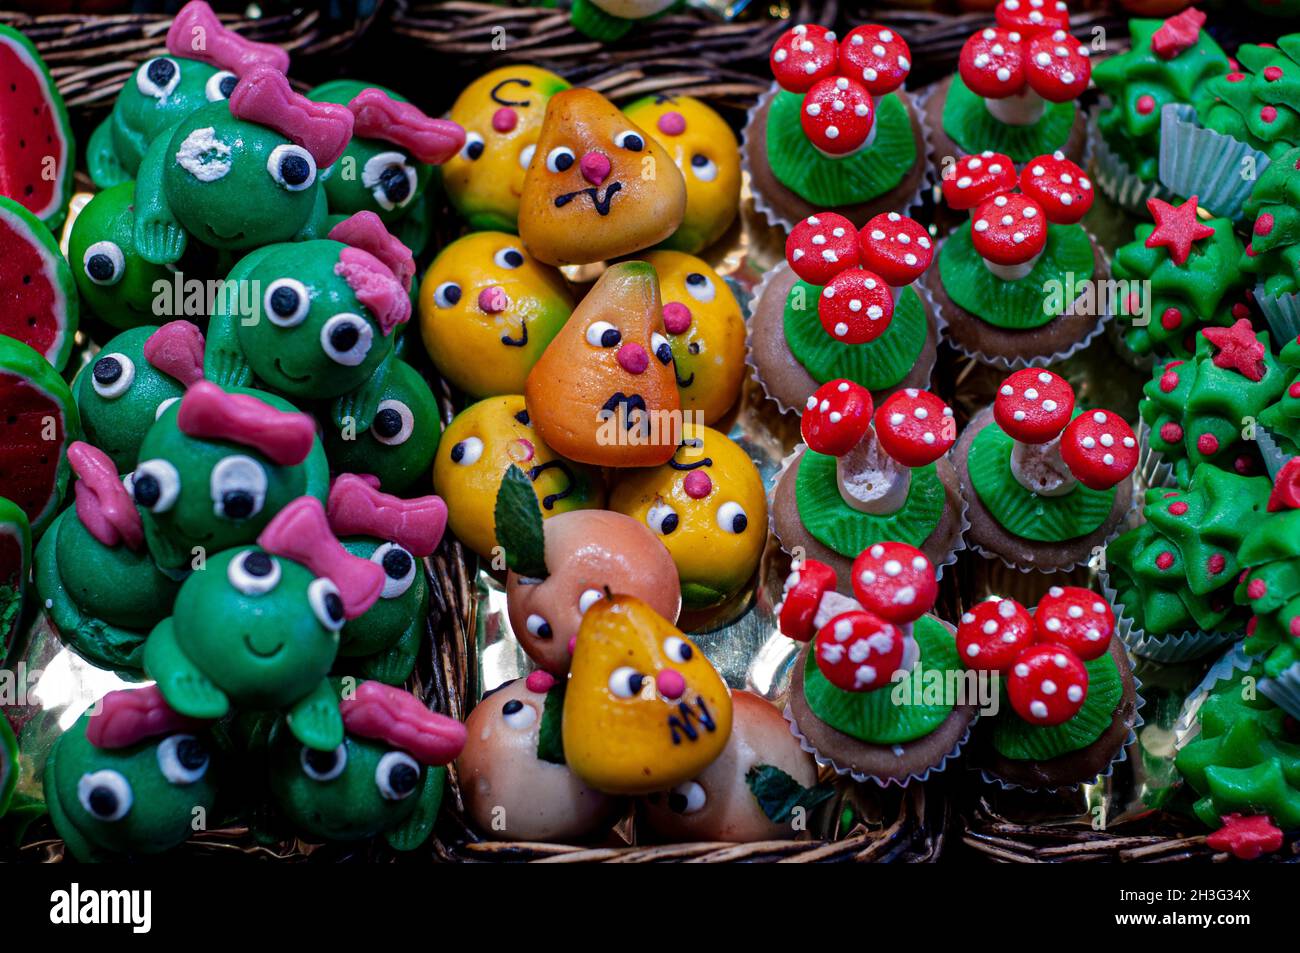 Mercat de Sant Josep, Sweets at a stall in the Boqueria market in Barcelona, Catalonia, Spain Stock Photo